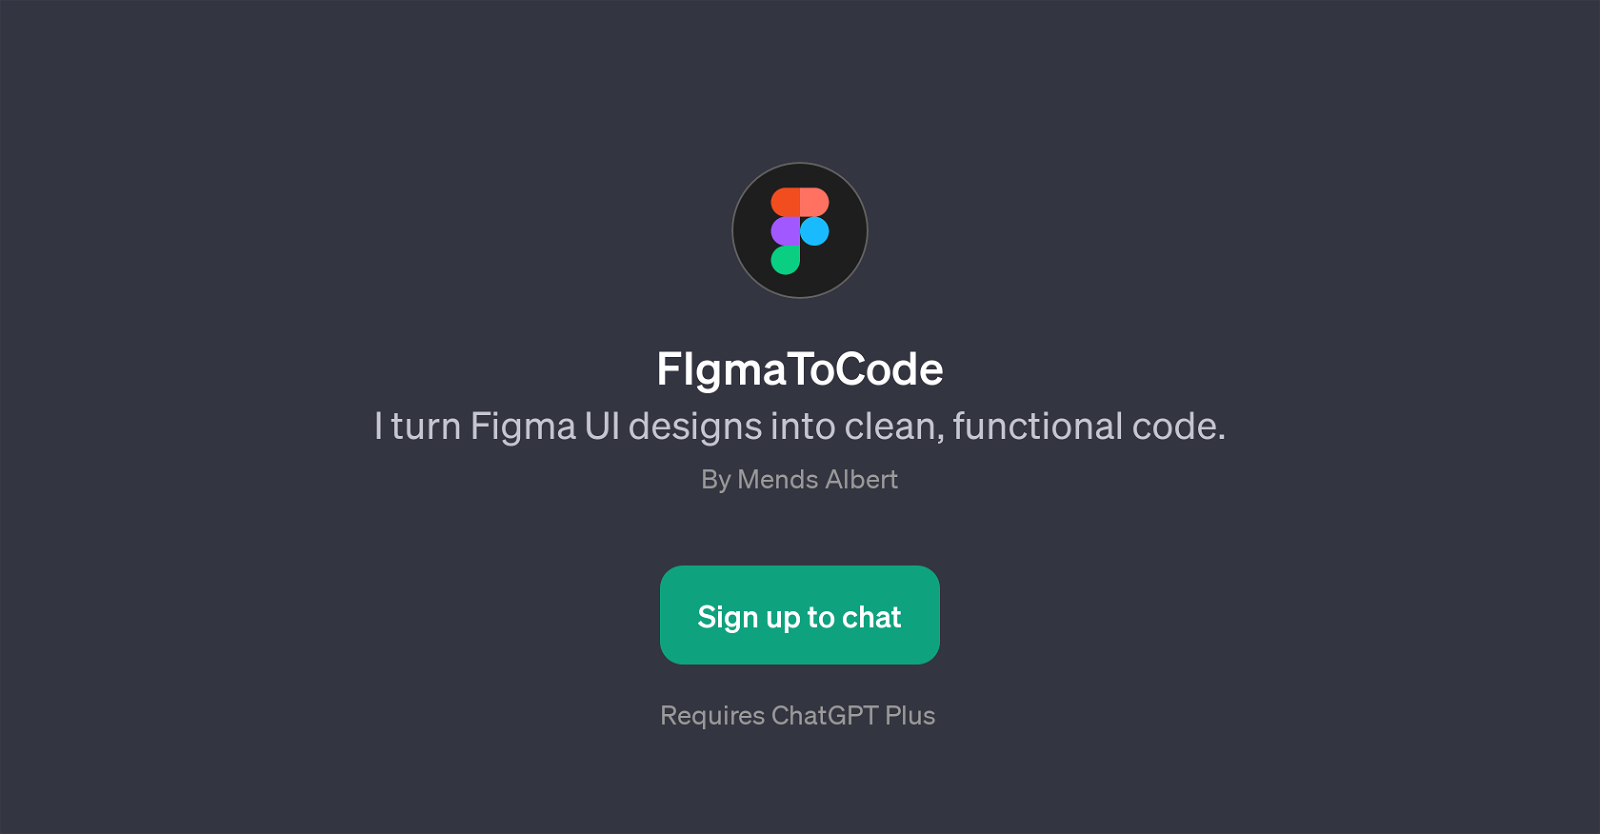 FIgmaToCode website